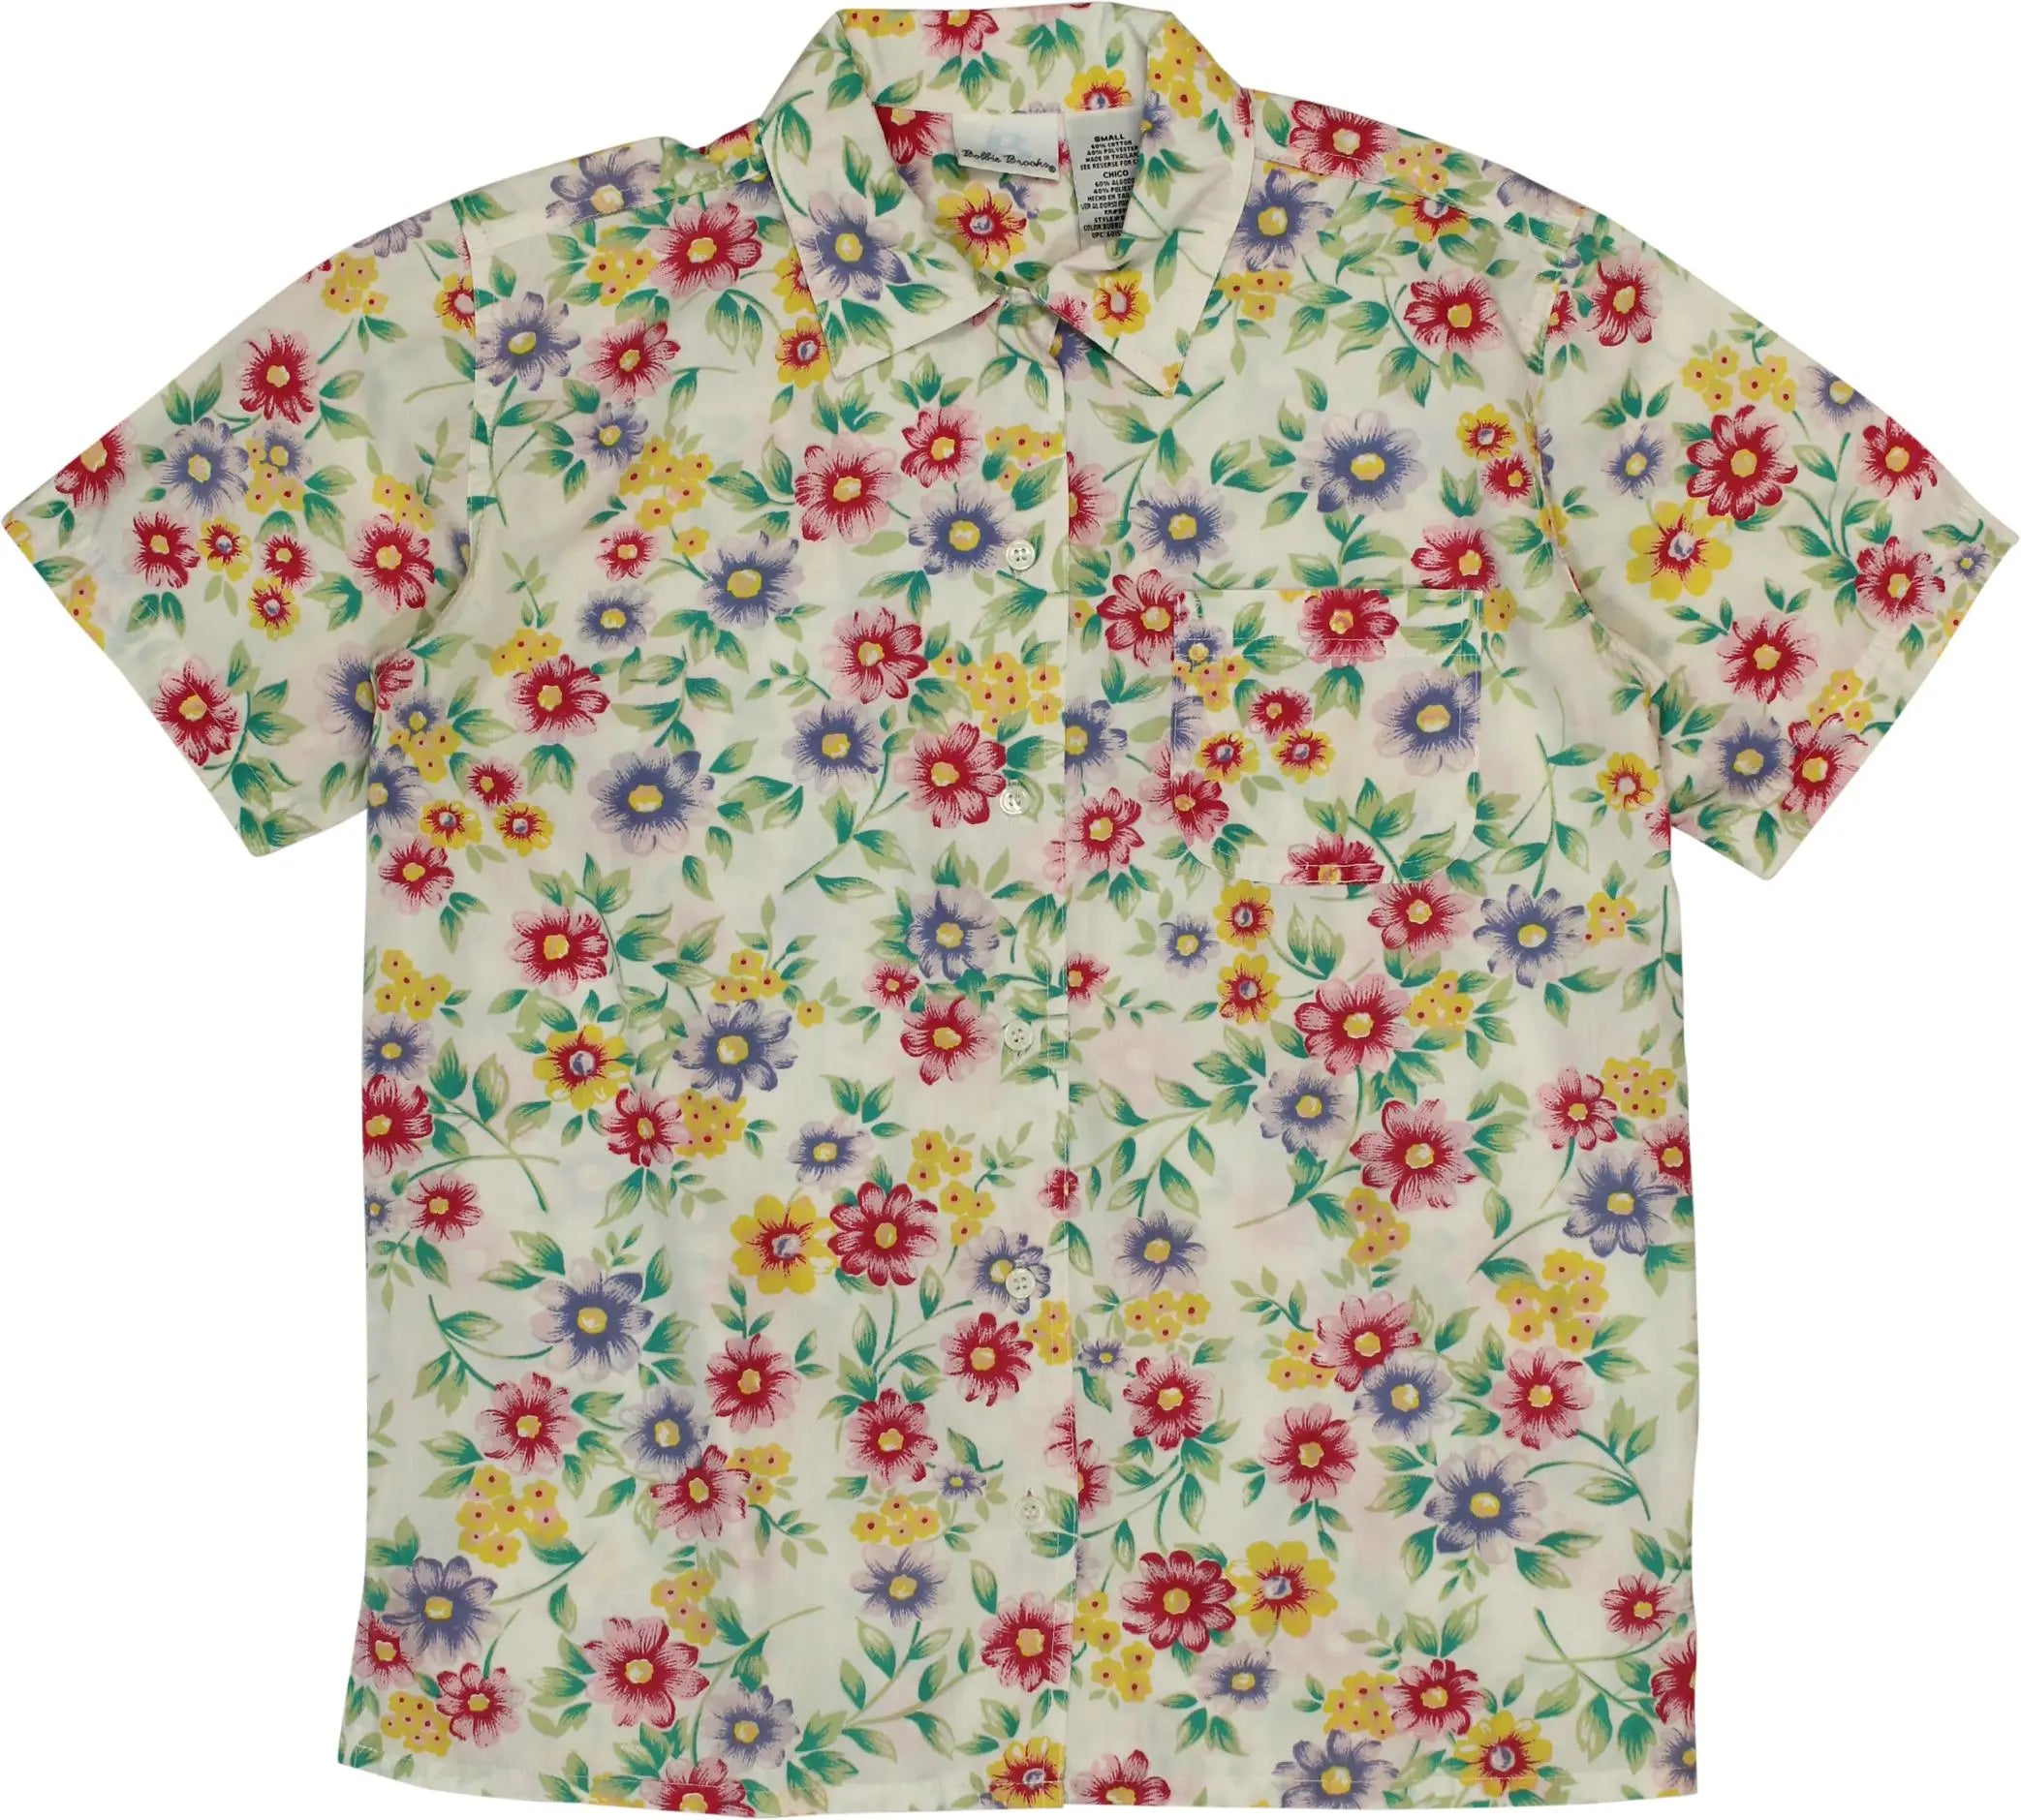 Bobbie Brooks - 90s Floral Blouse- ThriftTale.com - Vintage and second handclothing